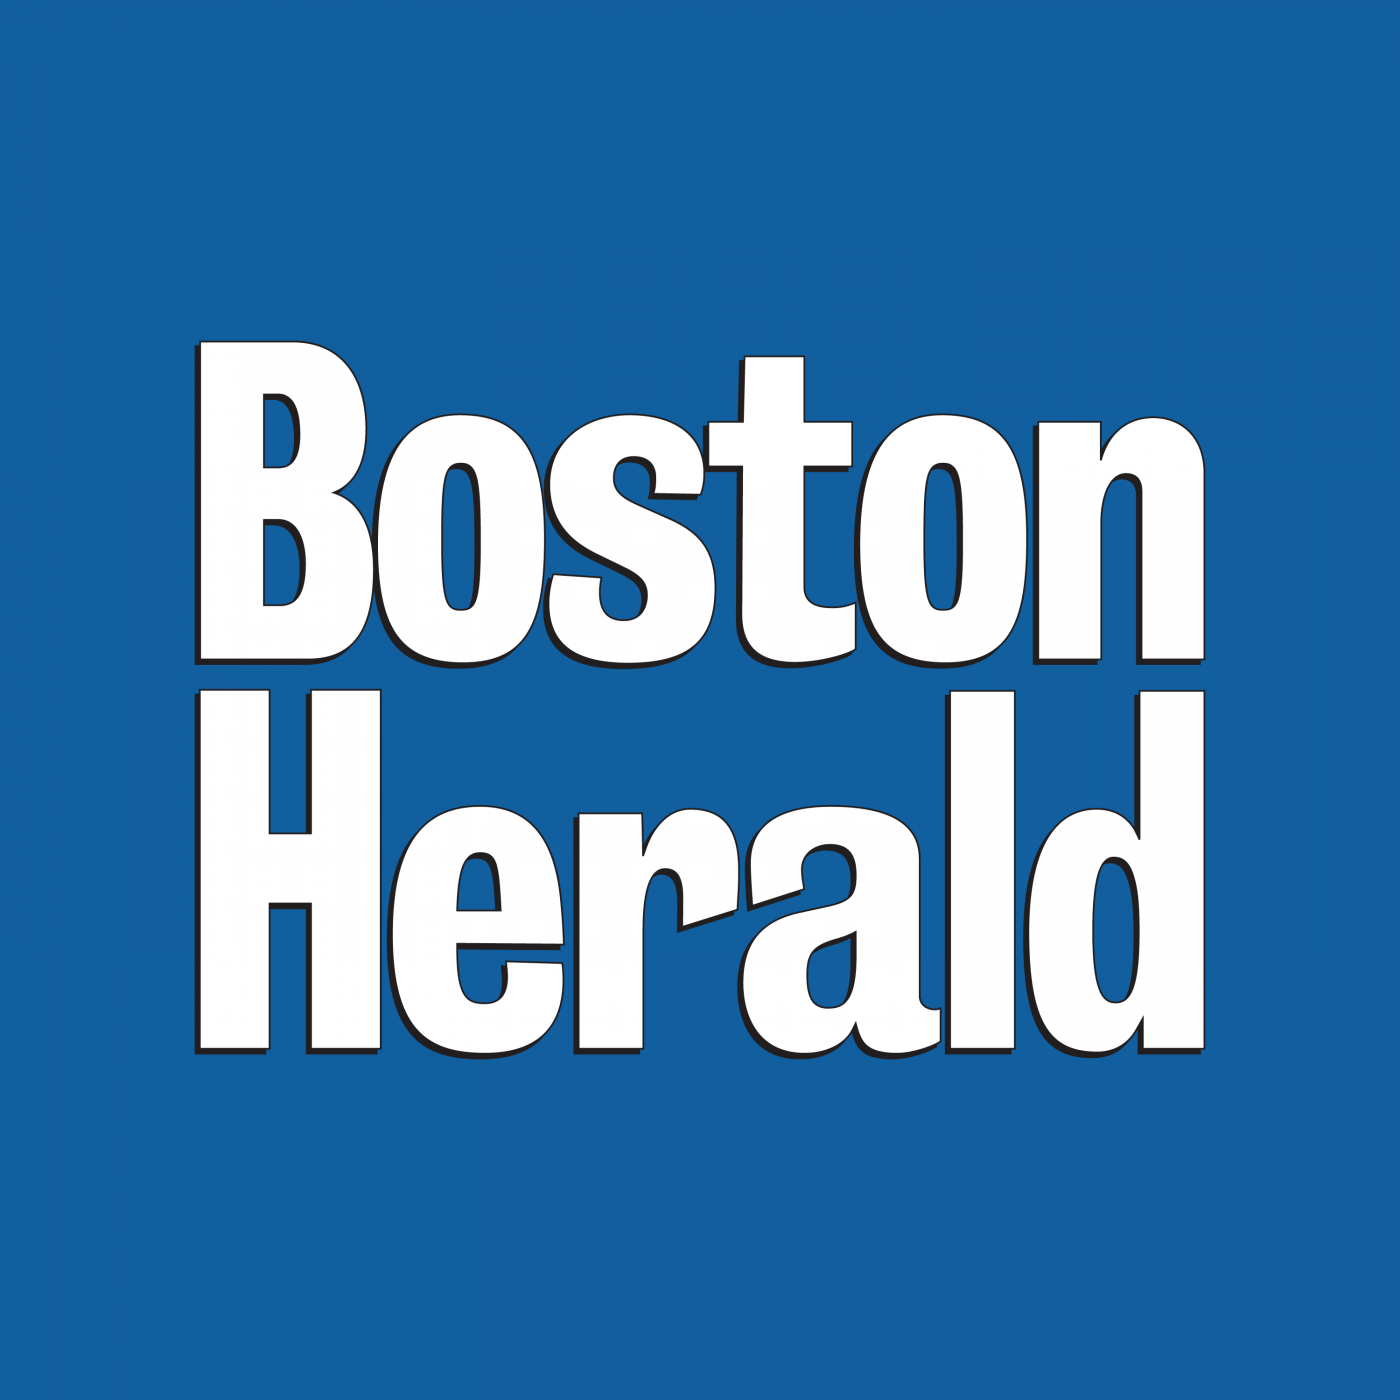 Bostonherald.com Logo - Boston Herald